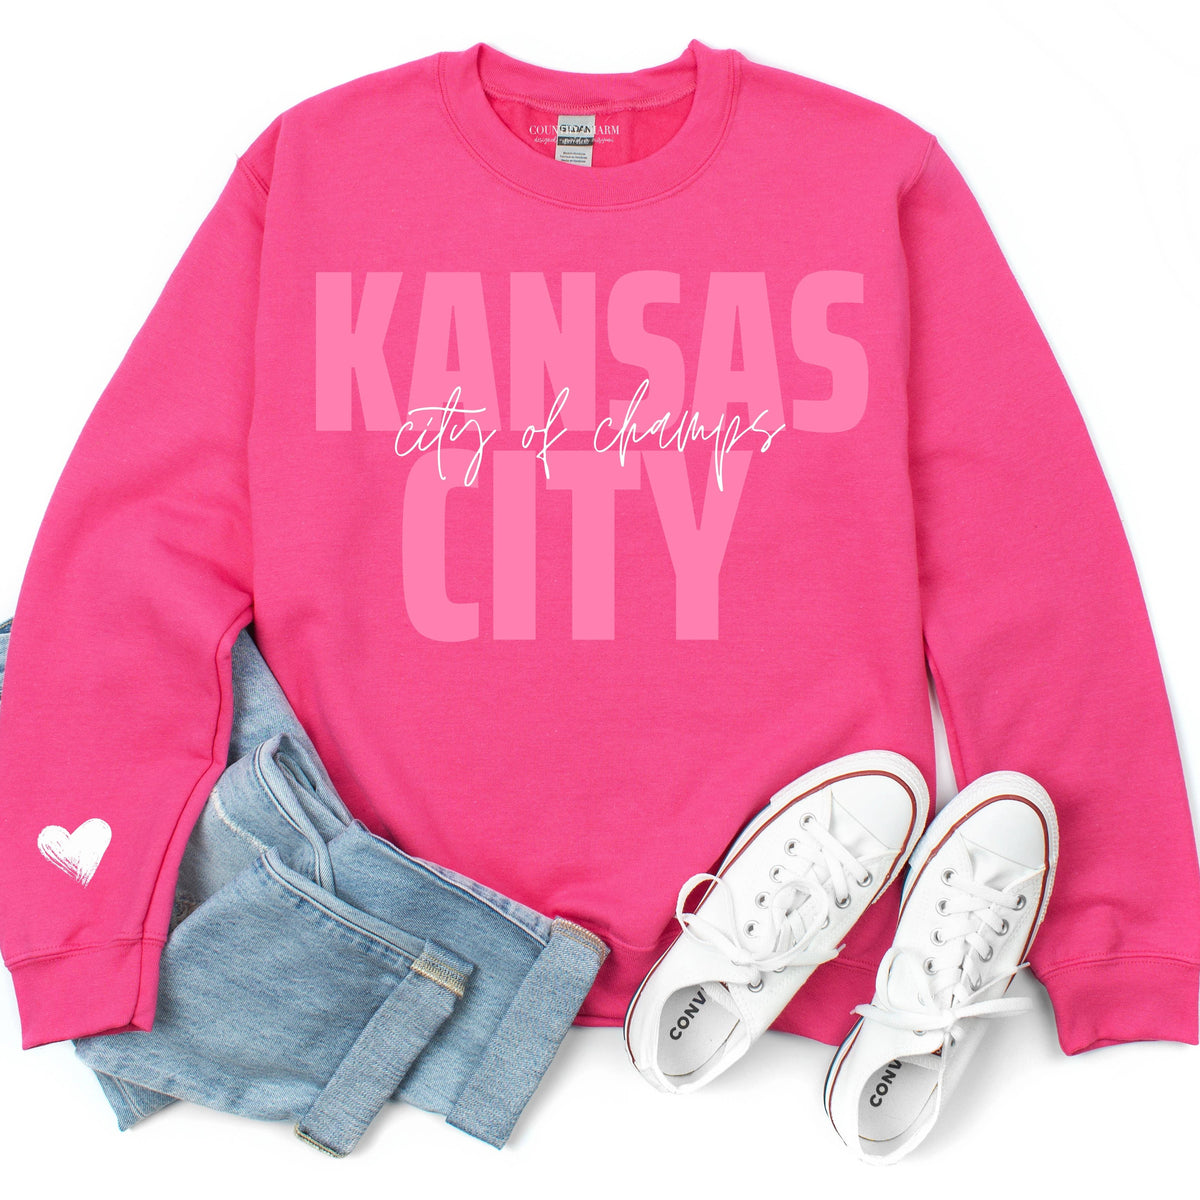 Kansas City | City of Champs + heart sleeve: XL